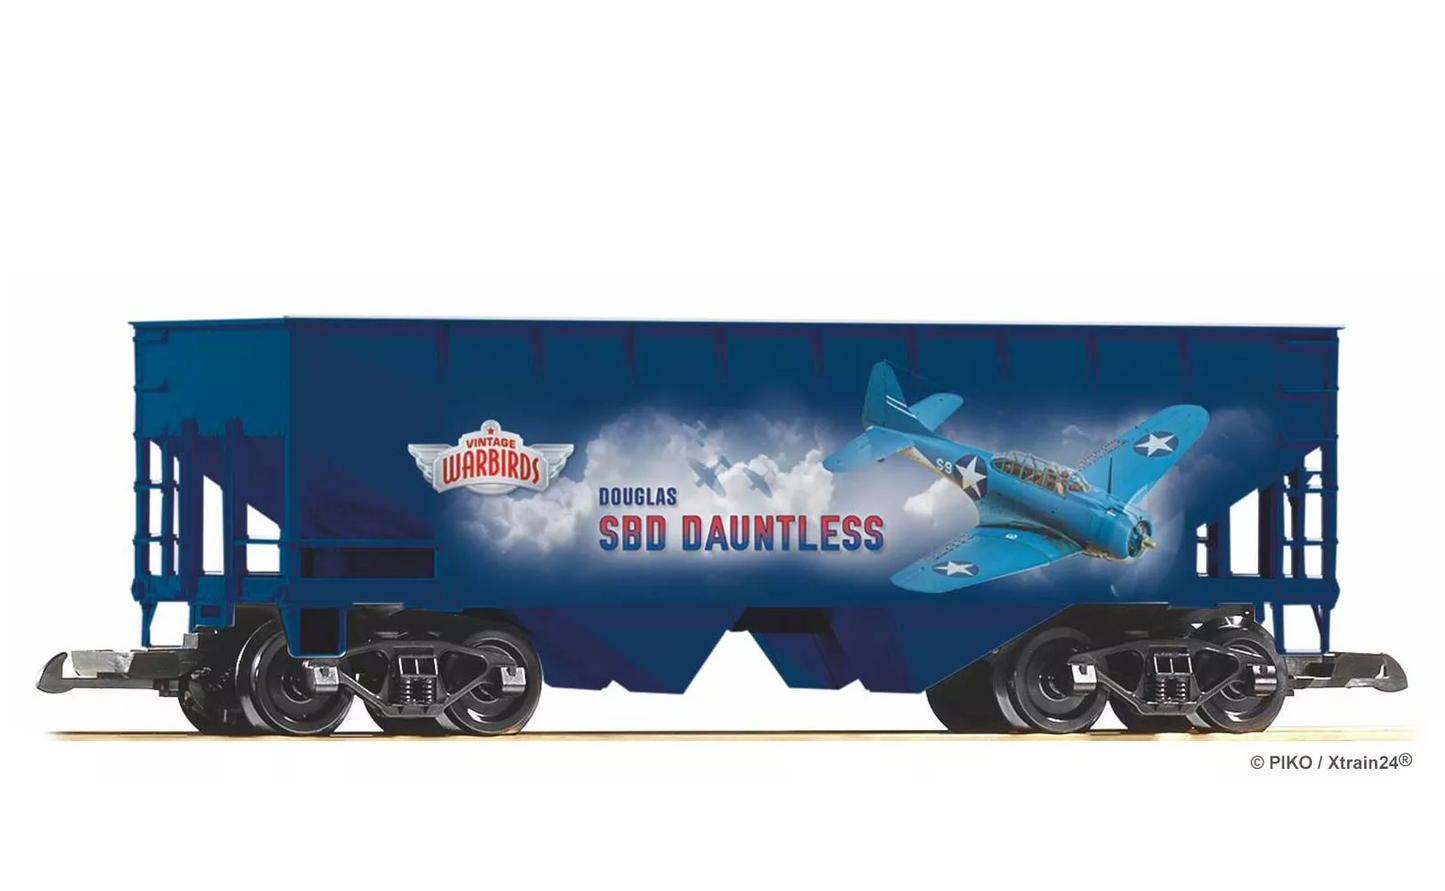 PIKO G Scale Warbird Hopper wagon "SBD Dauntless" - L38925